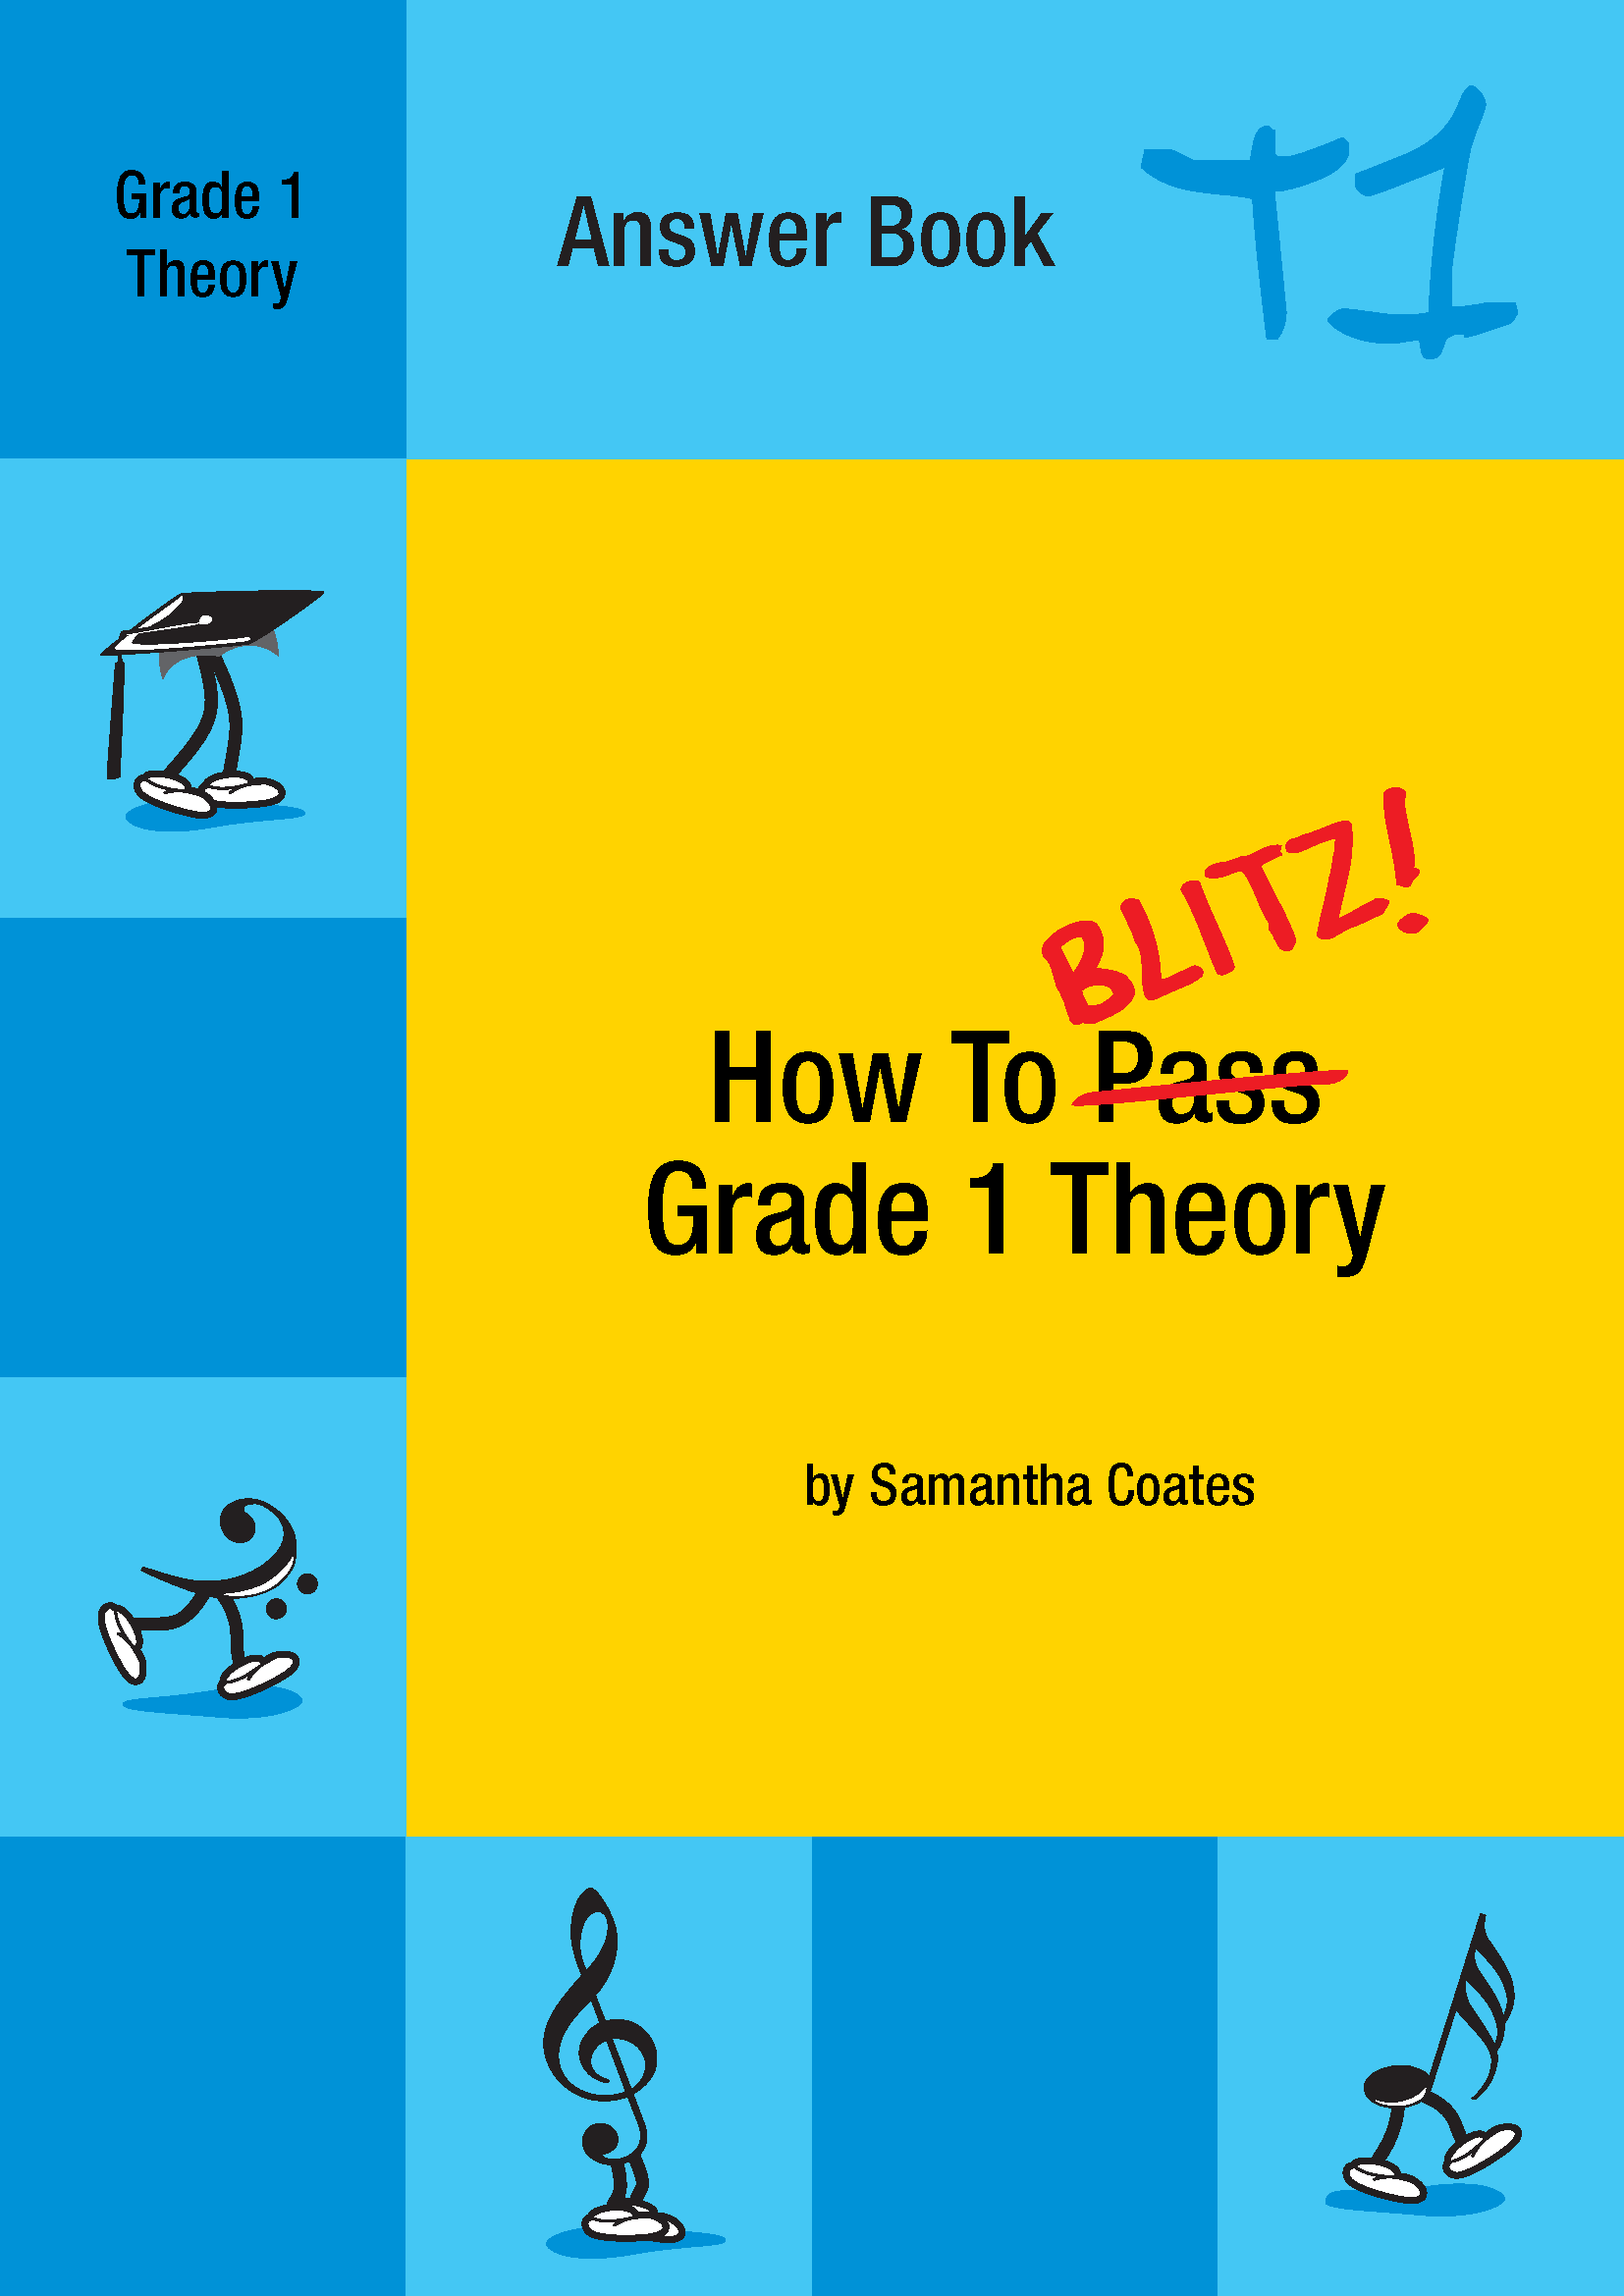 Theory Grade 1 Answer Book